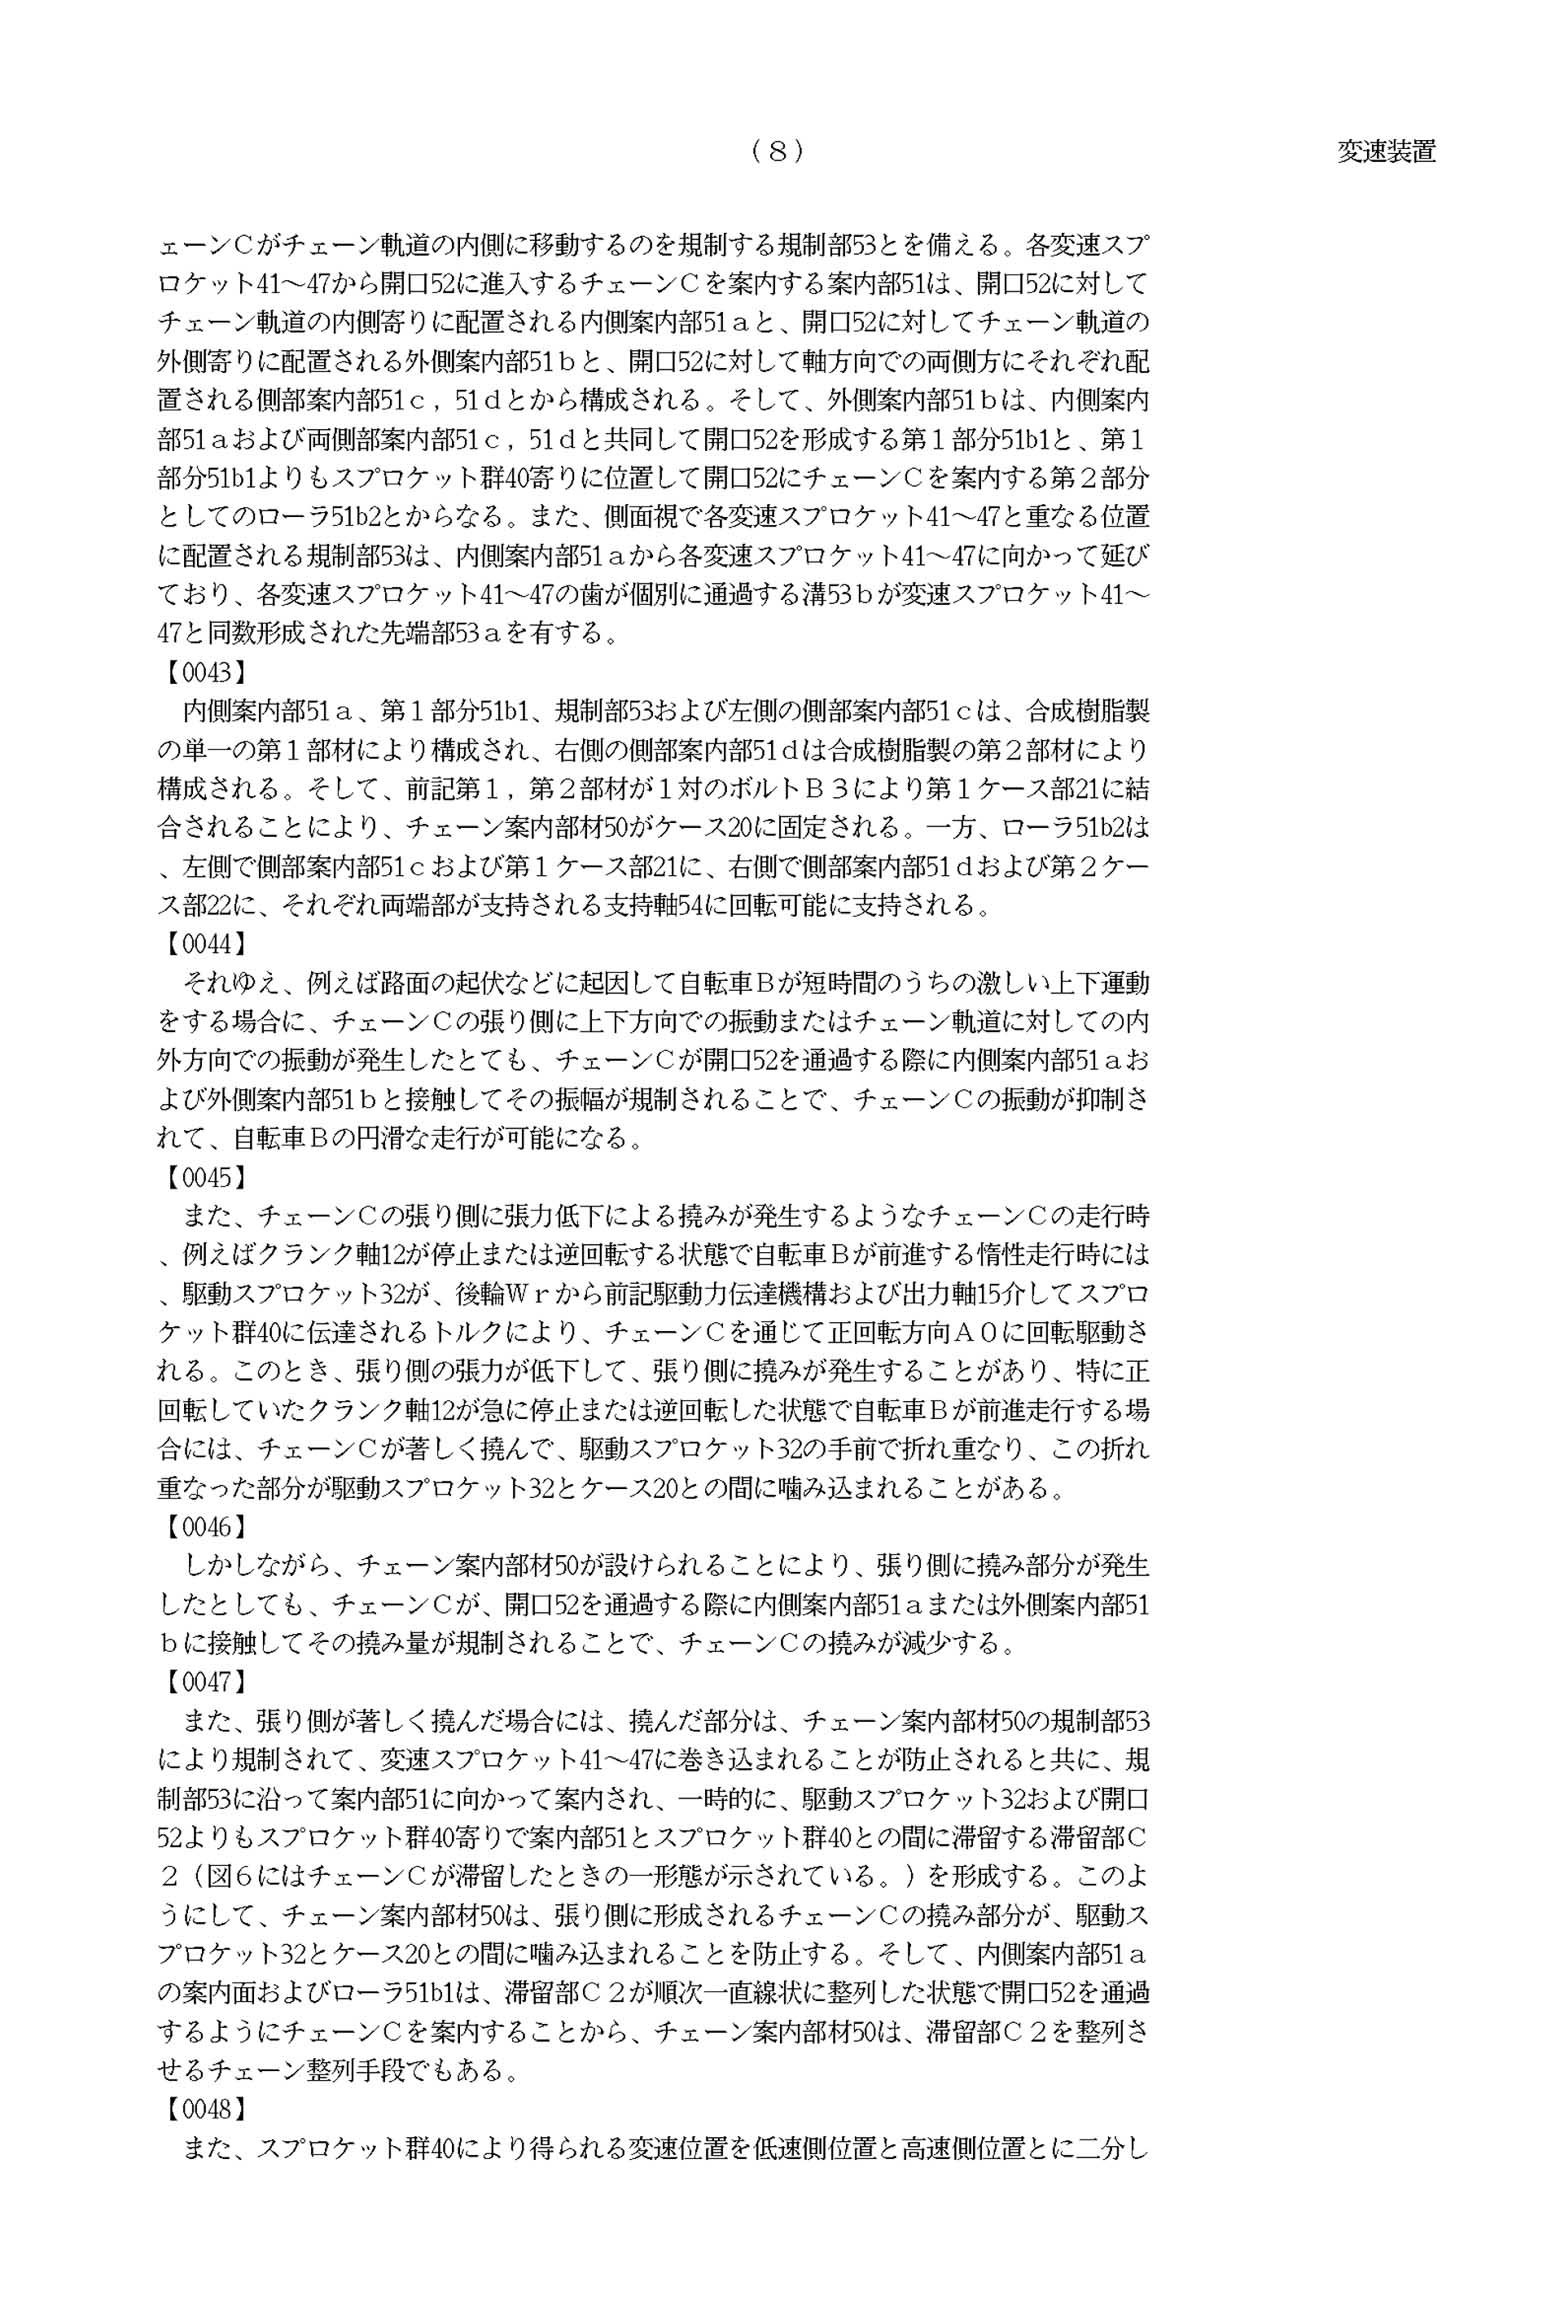 Japanese Patent 4416604 - Honda page 08 main image